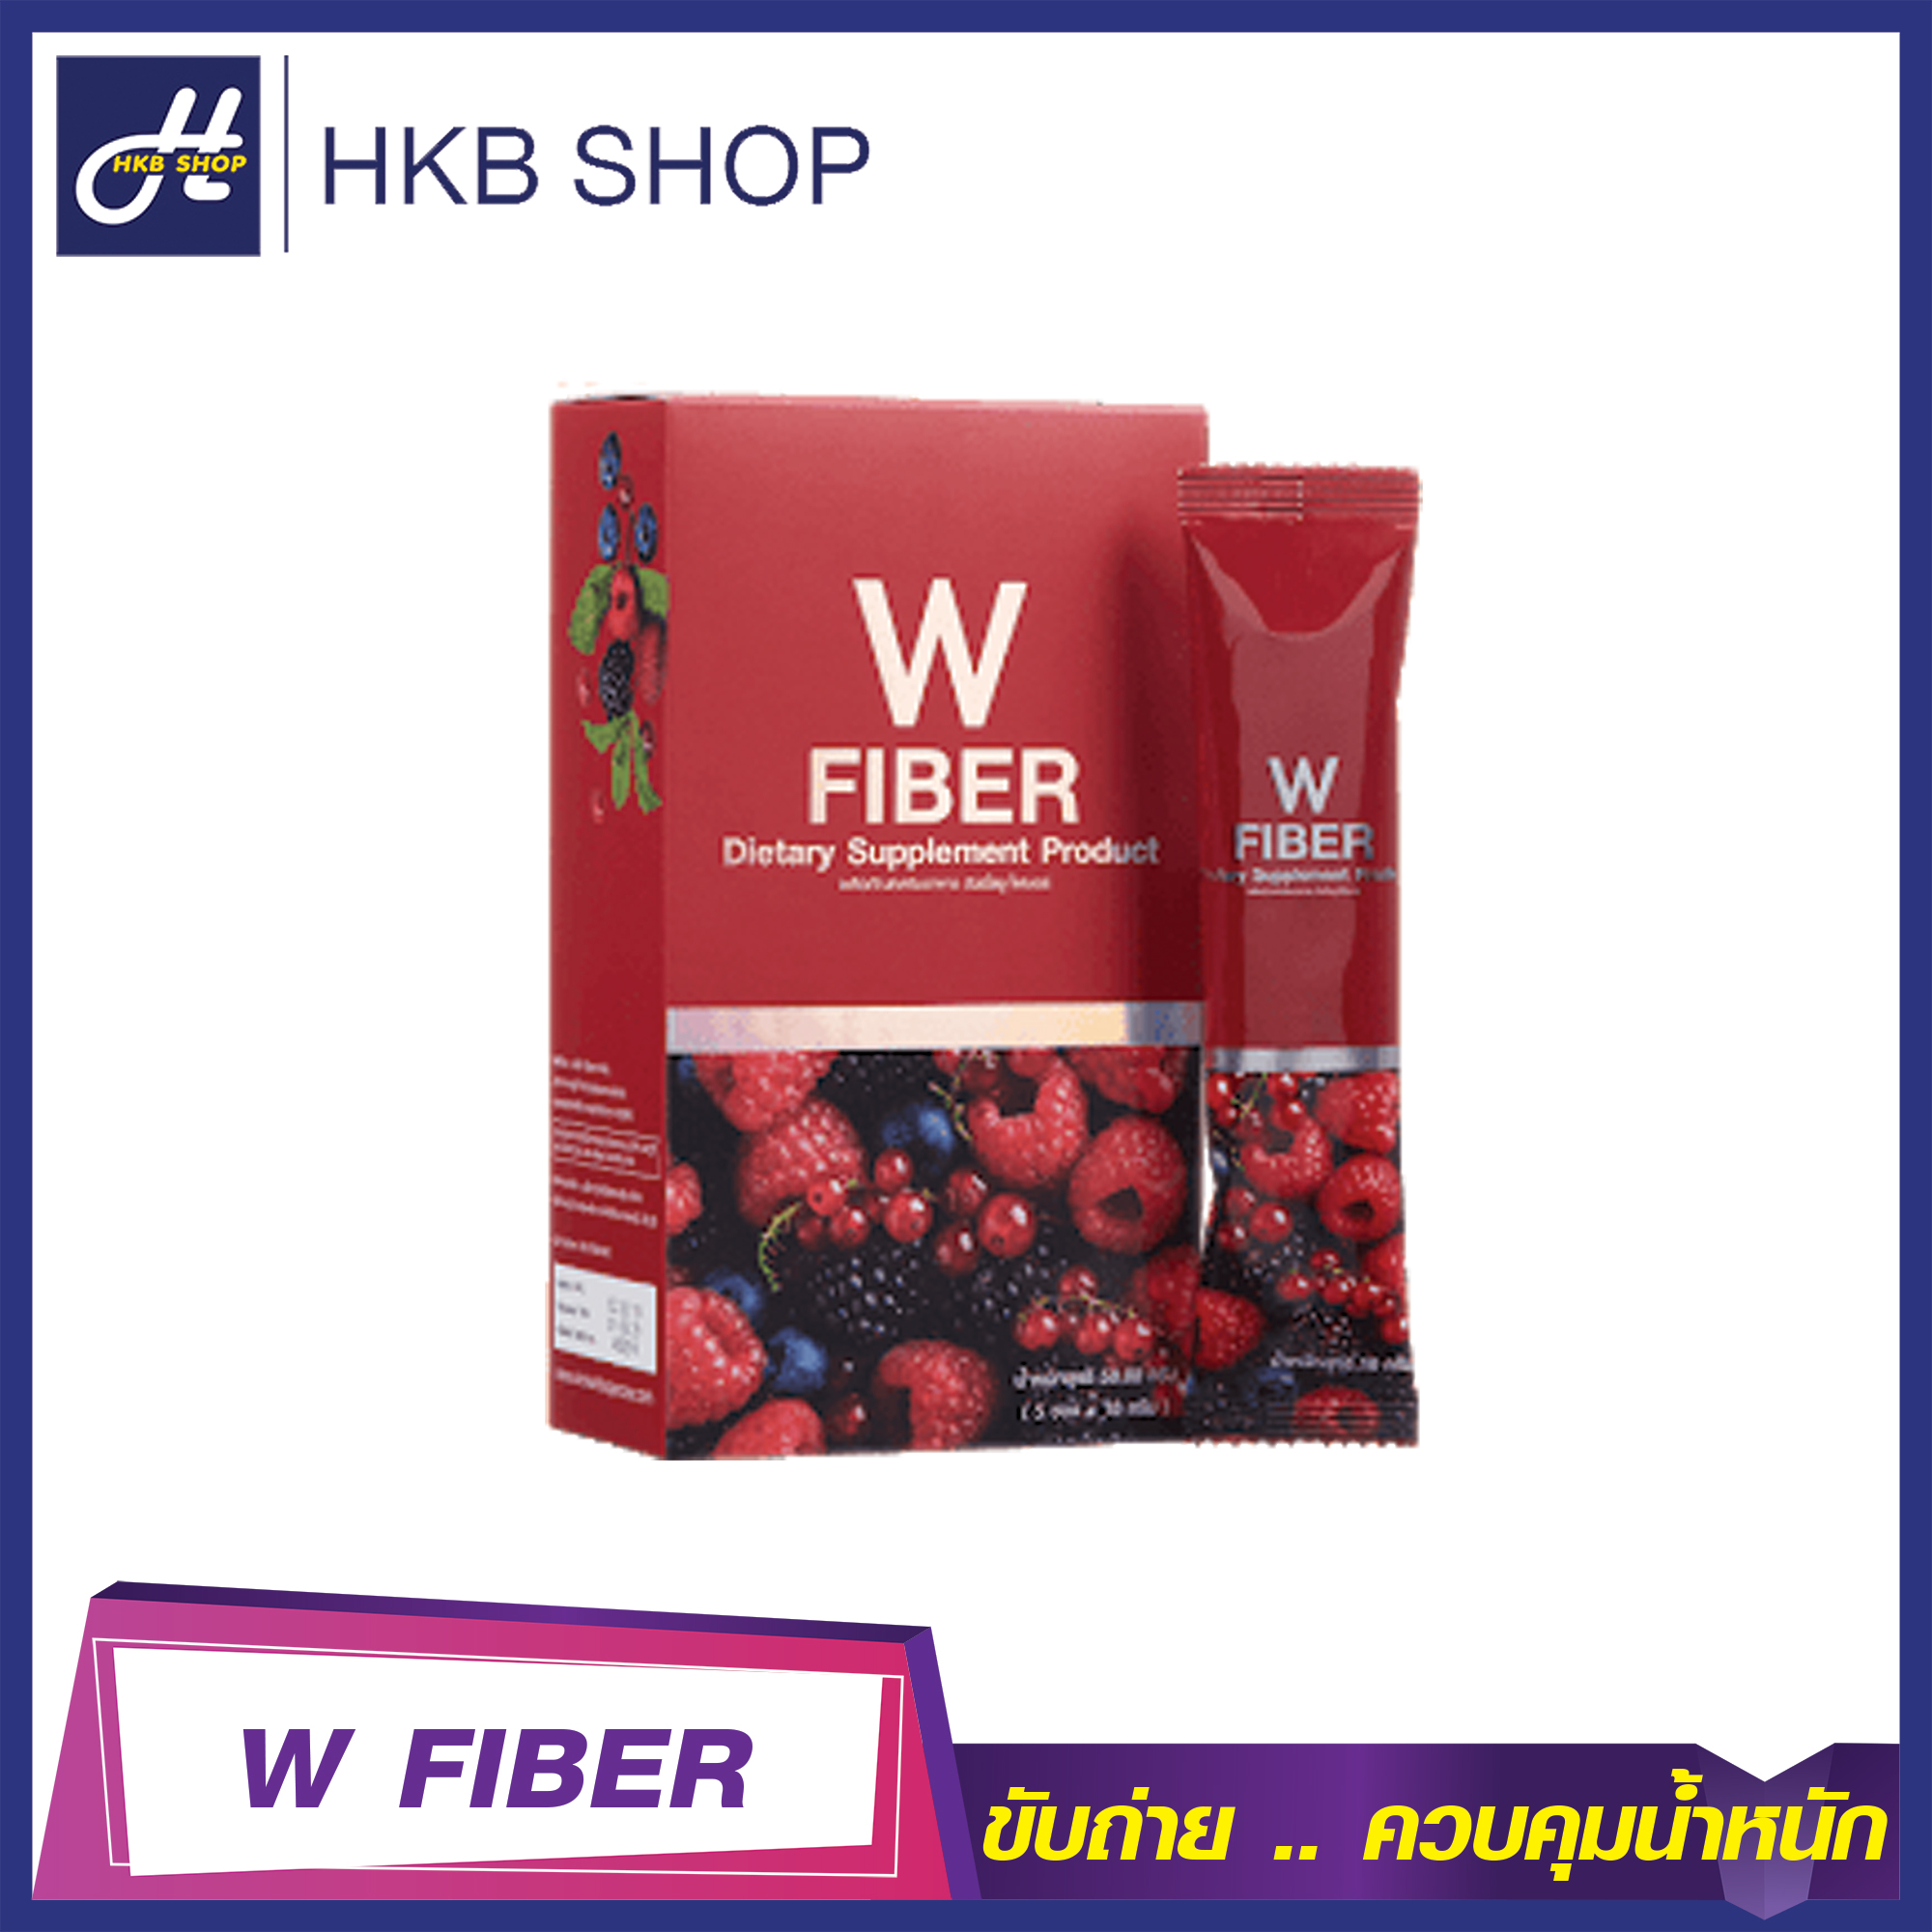 ⚡️1กล่อง⚡️ Wink White W Fiber วิงค์ไวท์ ดับเบิ้ลยู ไฟเบอร์ อาหารเสริมช่วยขับถ่าย By HKB SHOP